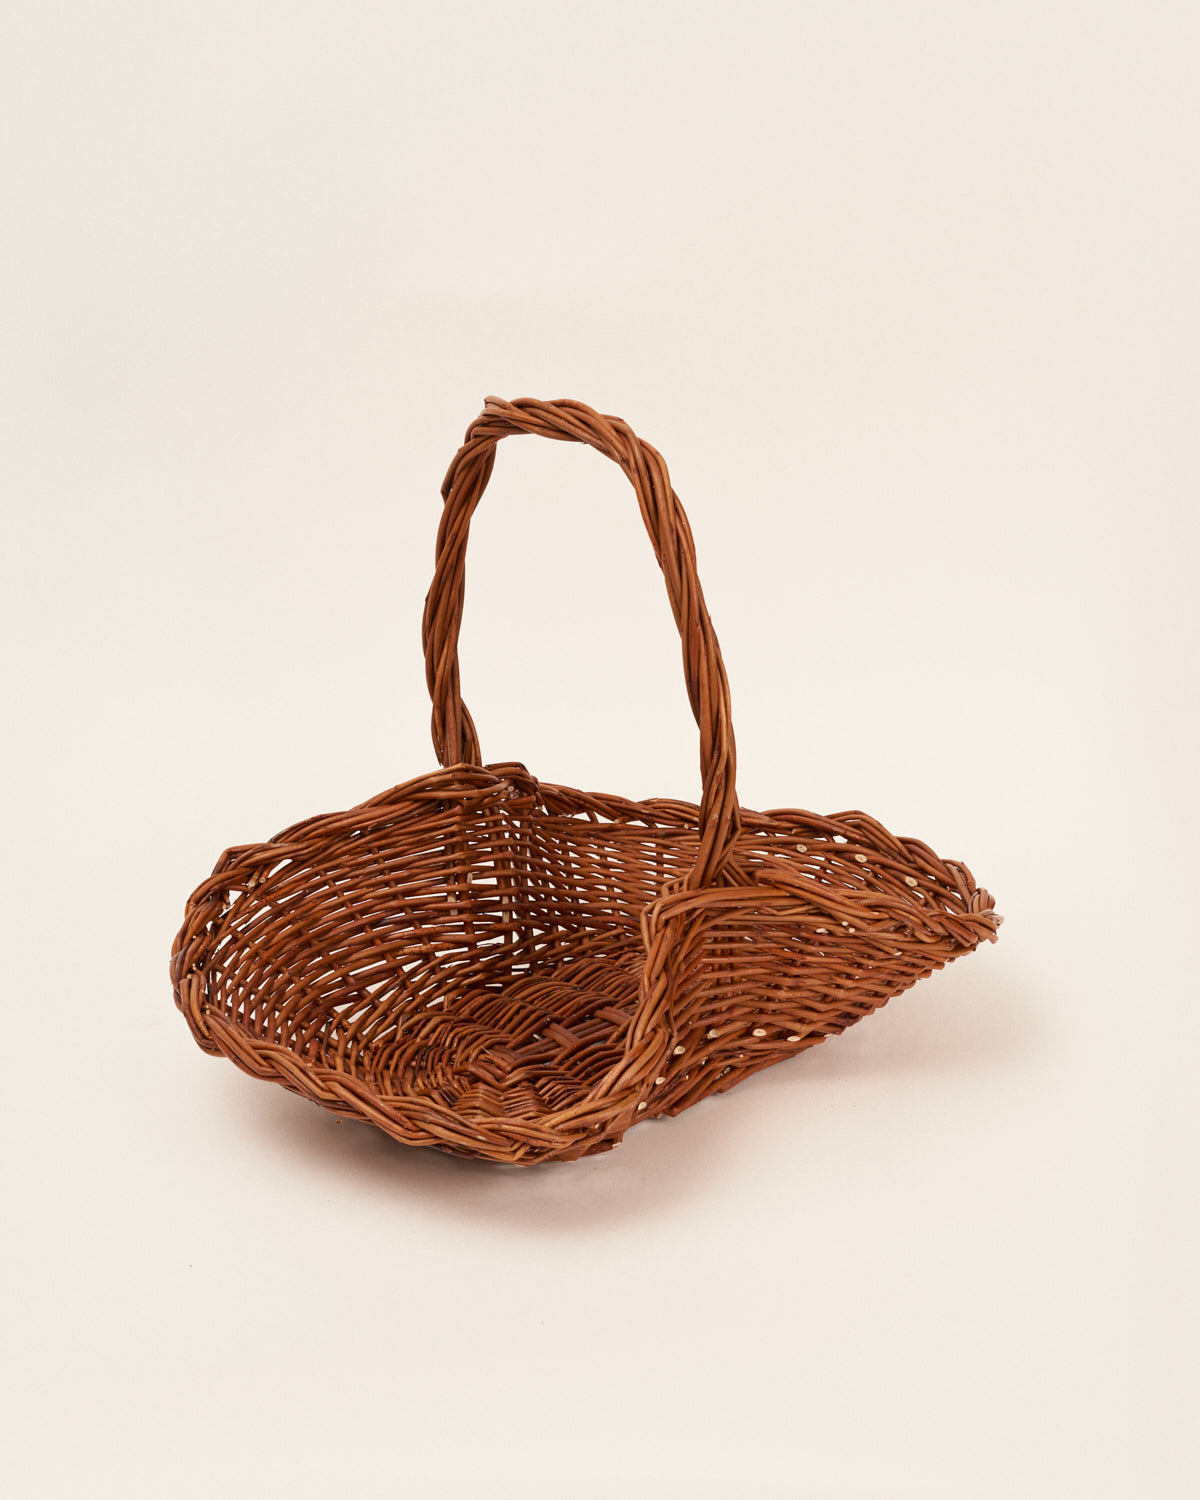 French flower basket